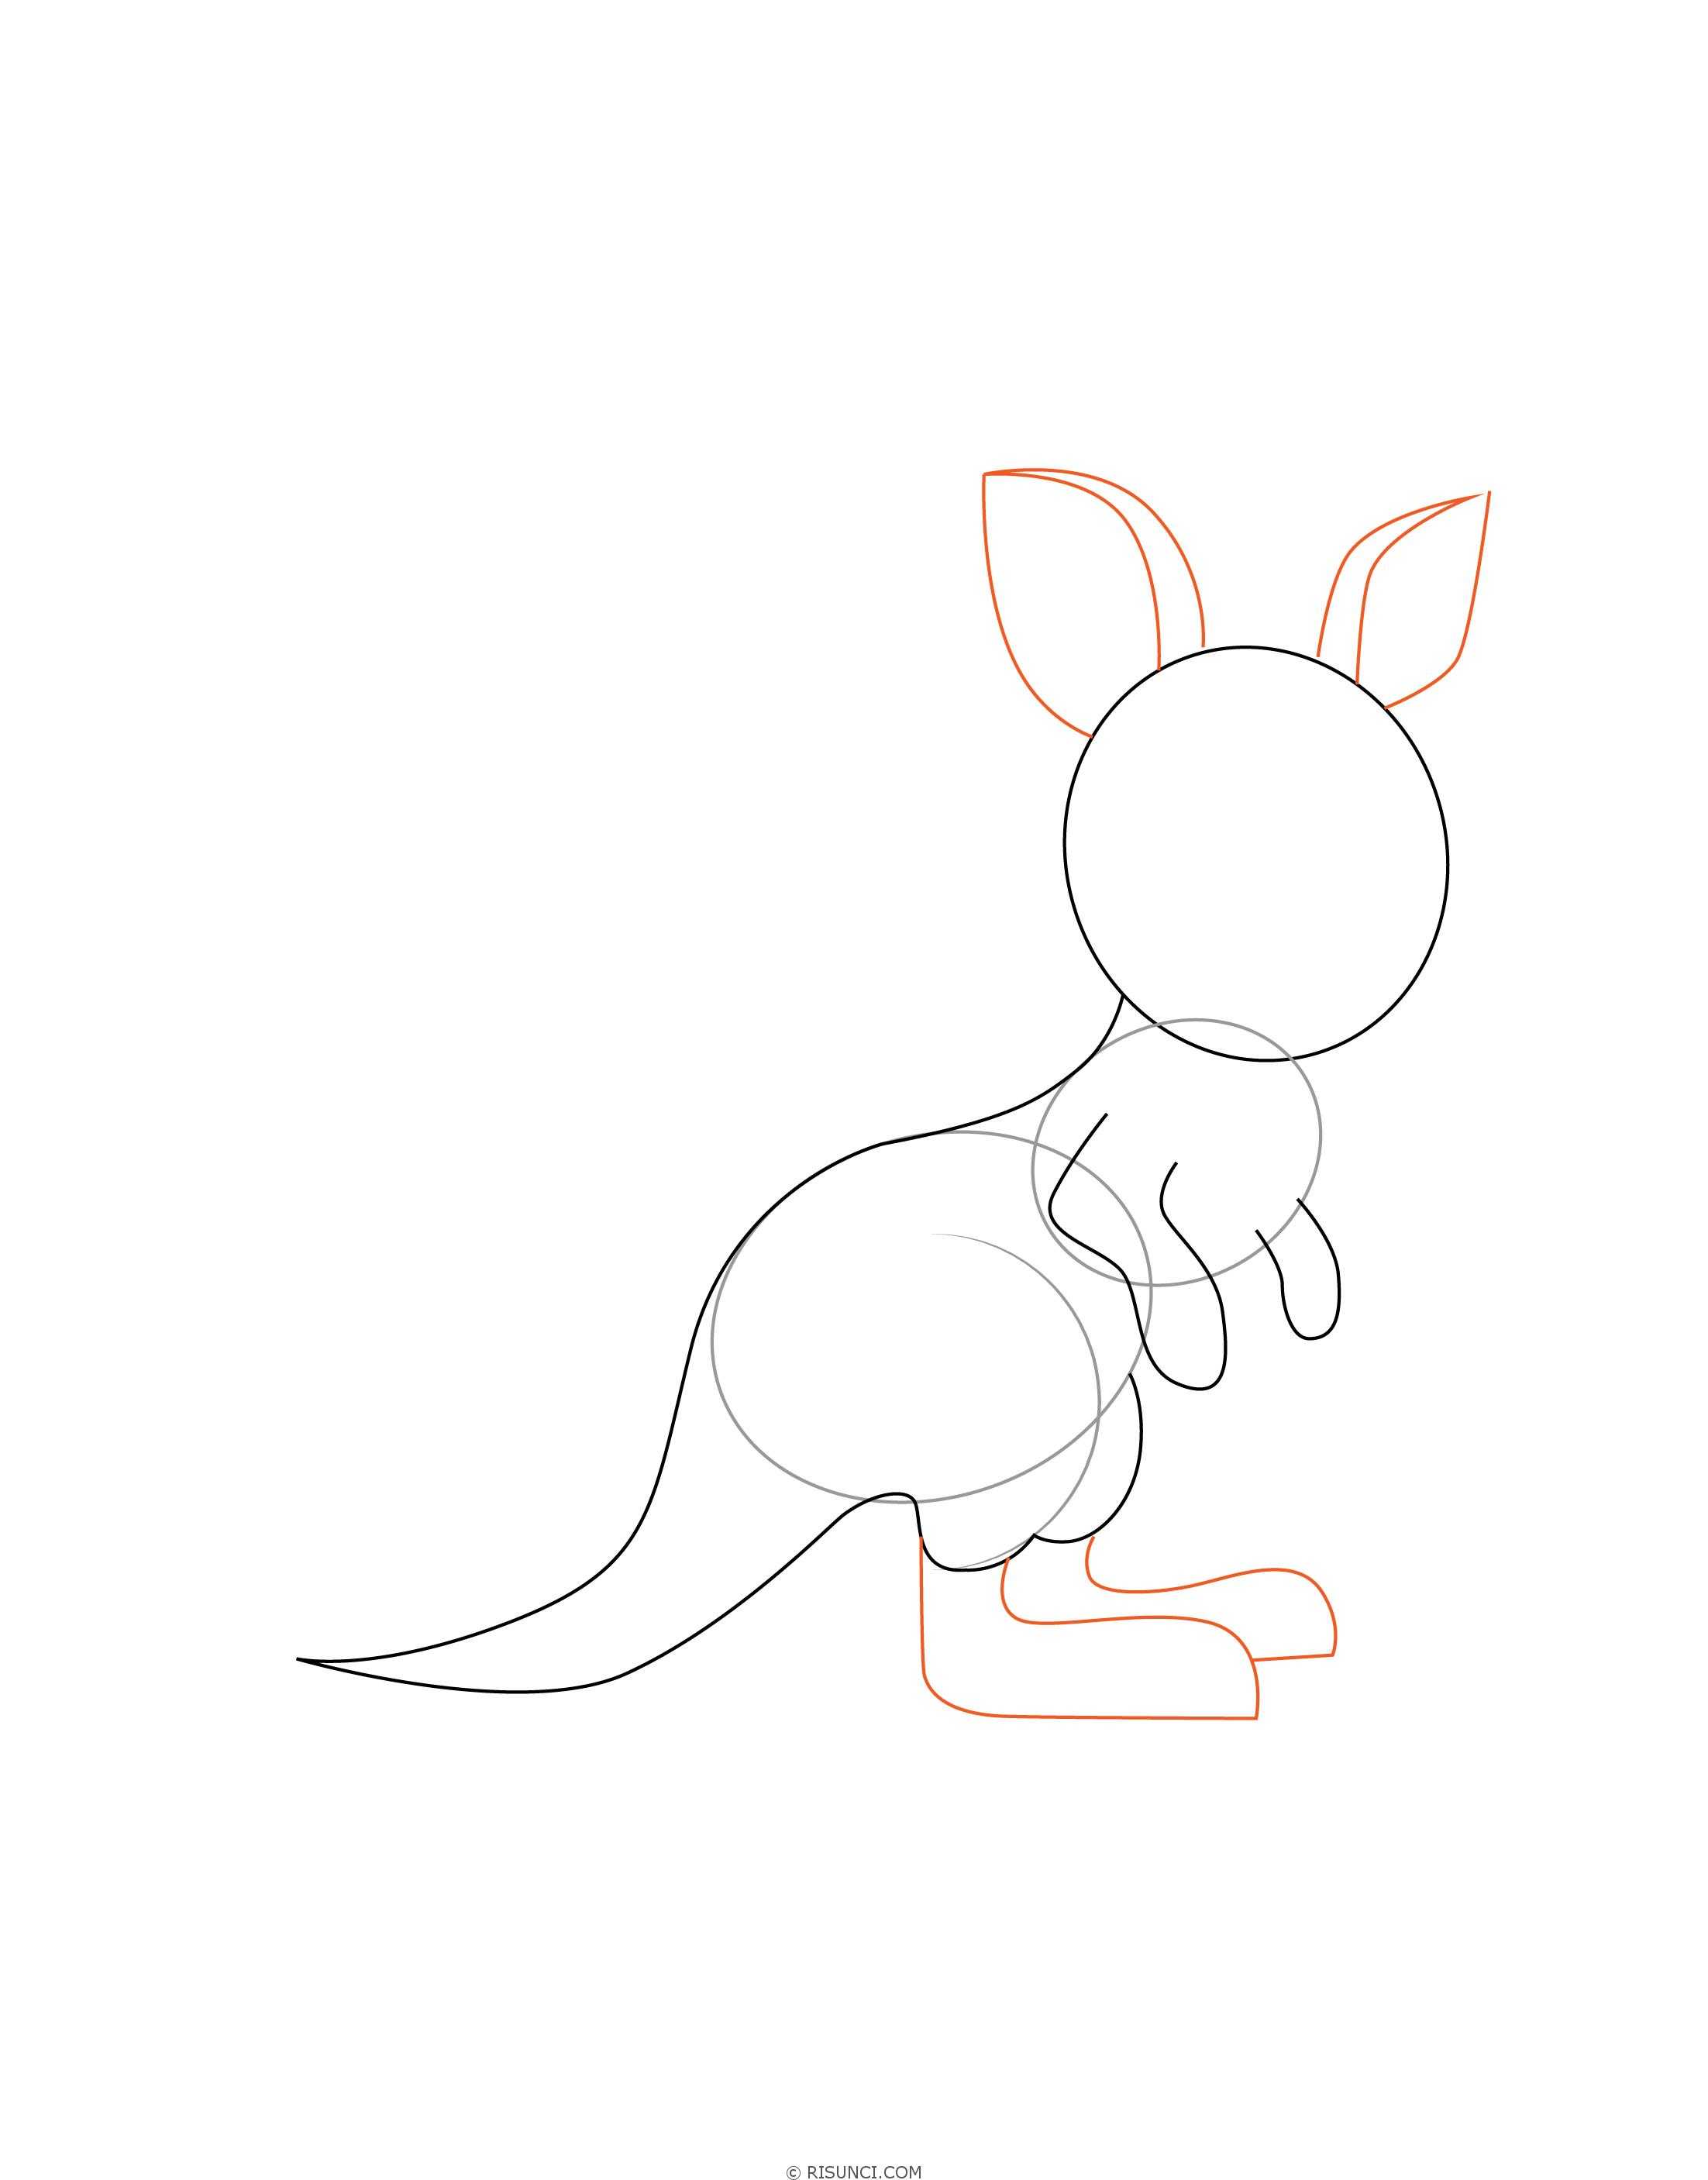 Нарисовать кенгуру поэтапно карандашом – как нарисовать кенгуру поэтапно? ✏ рисунки карандашом поэтапно